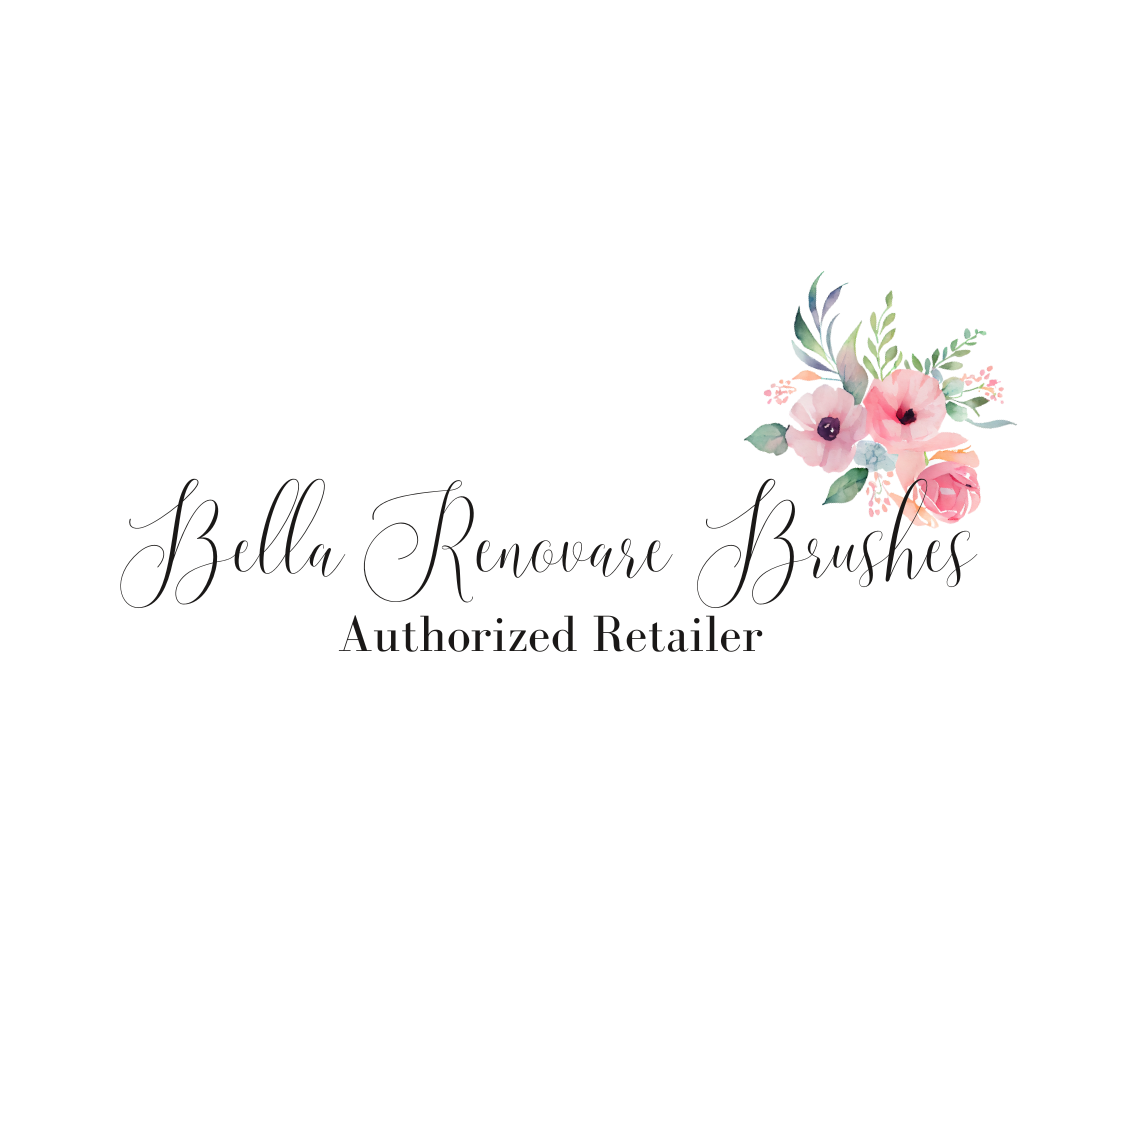 CrysDawna Brush Trust the Process - Bella Renovare